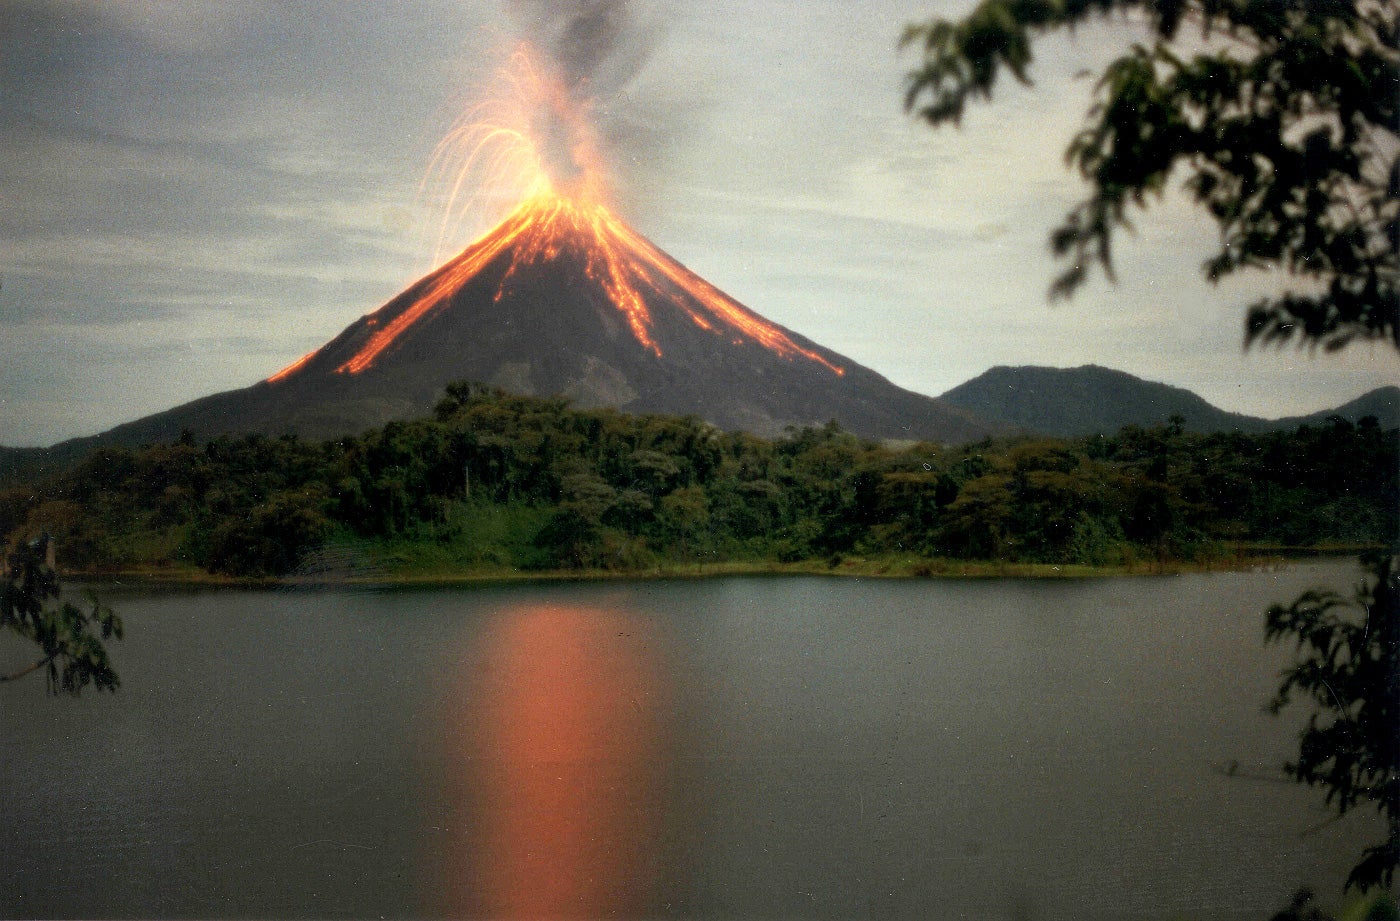 visit a volcano